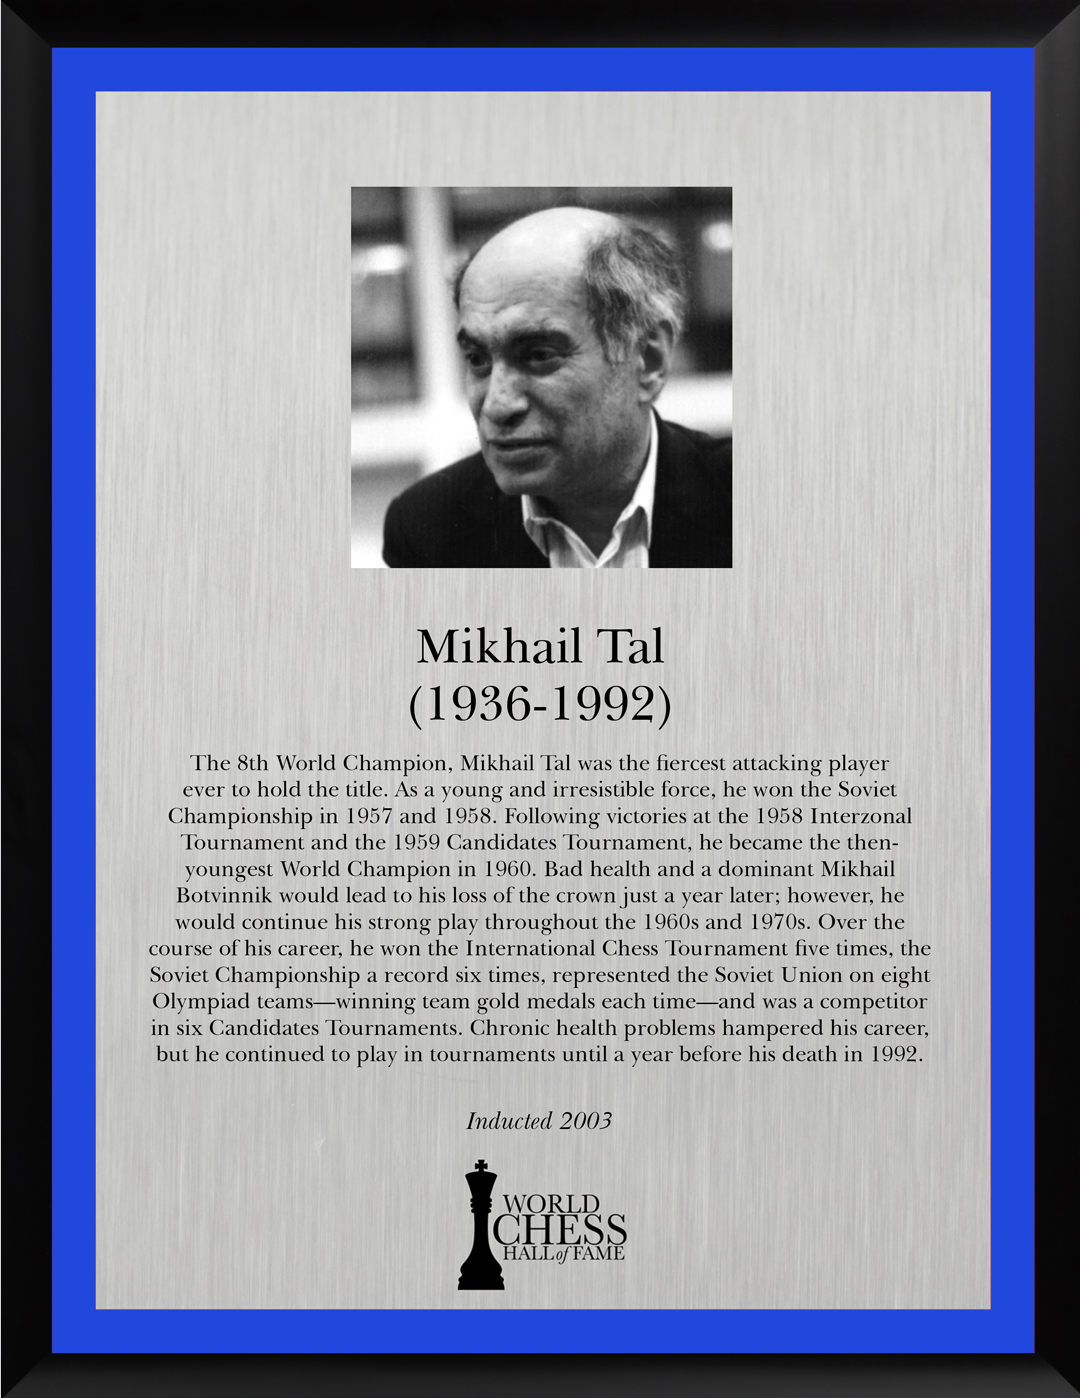 The Grand Master Mikhail Tal